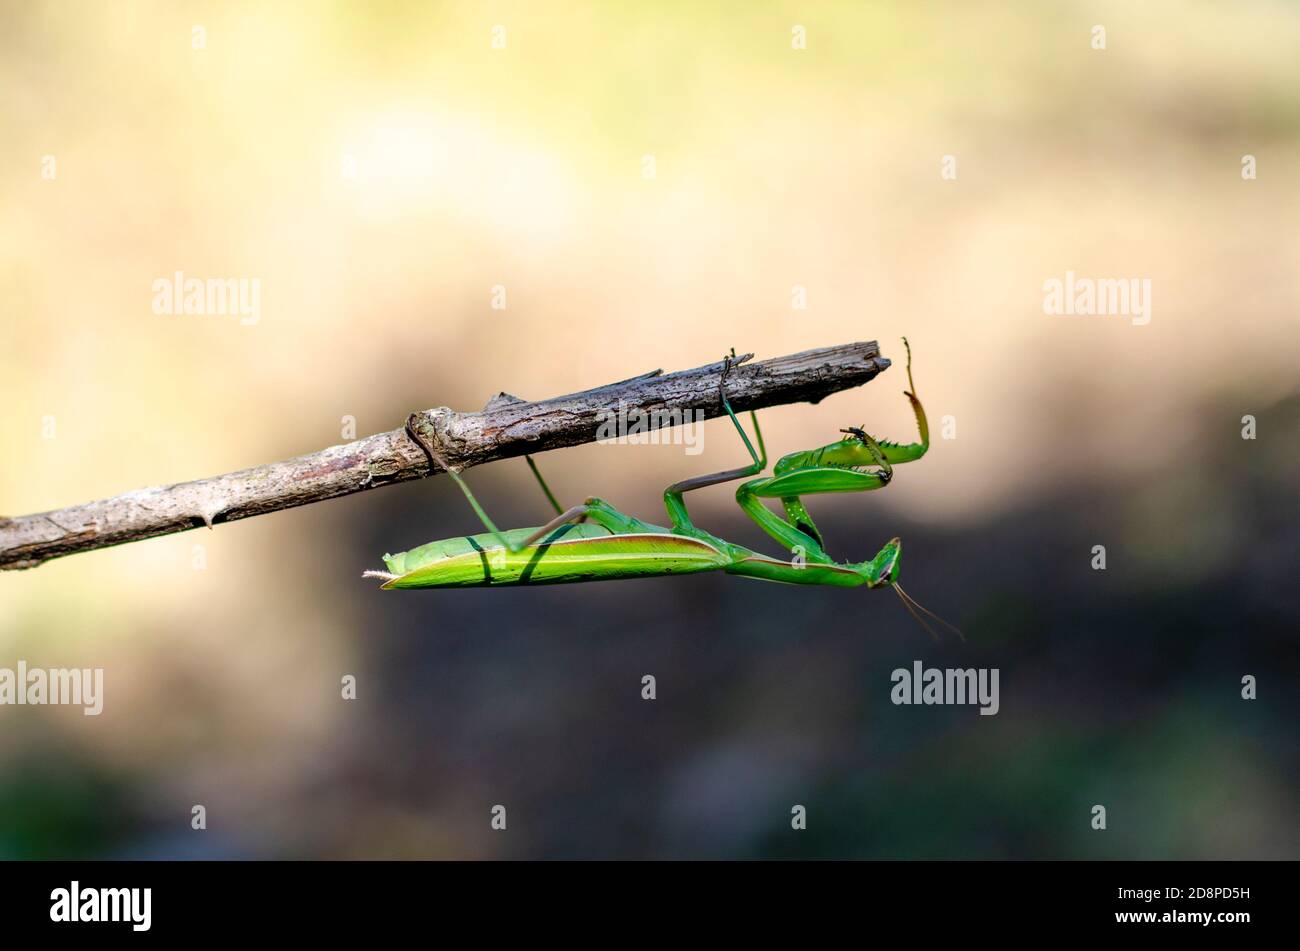 green praying mantis on a stick Stock Photo